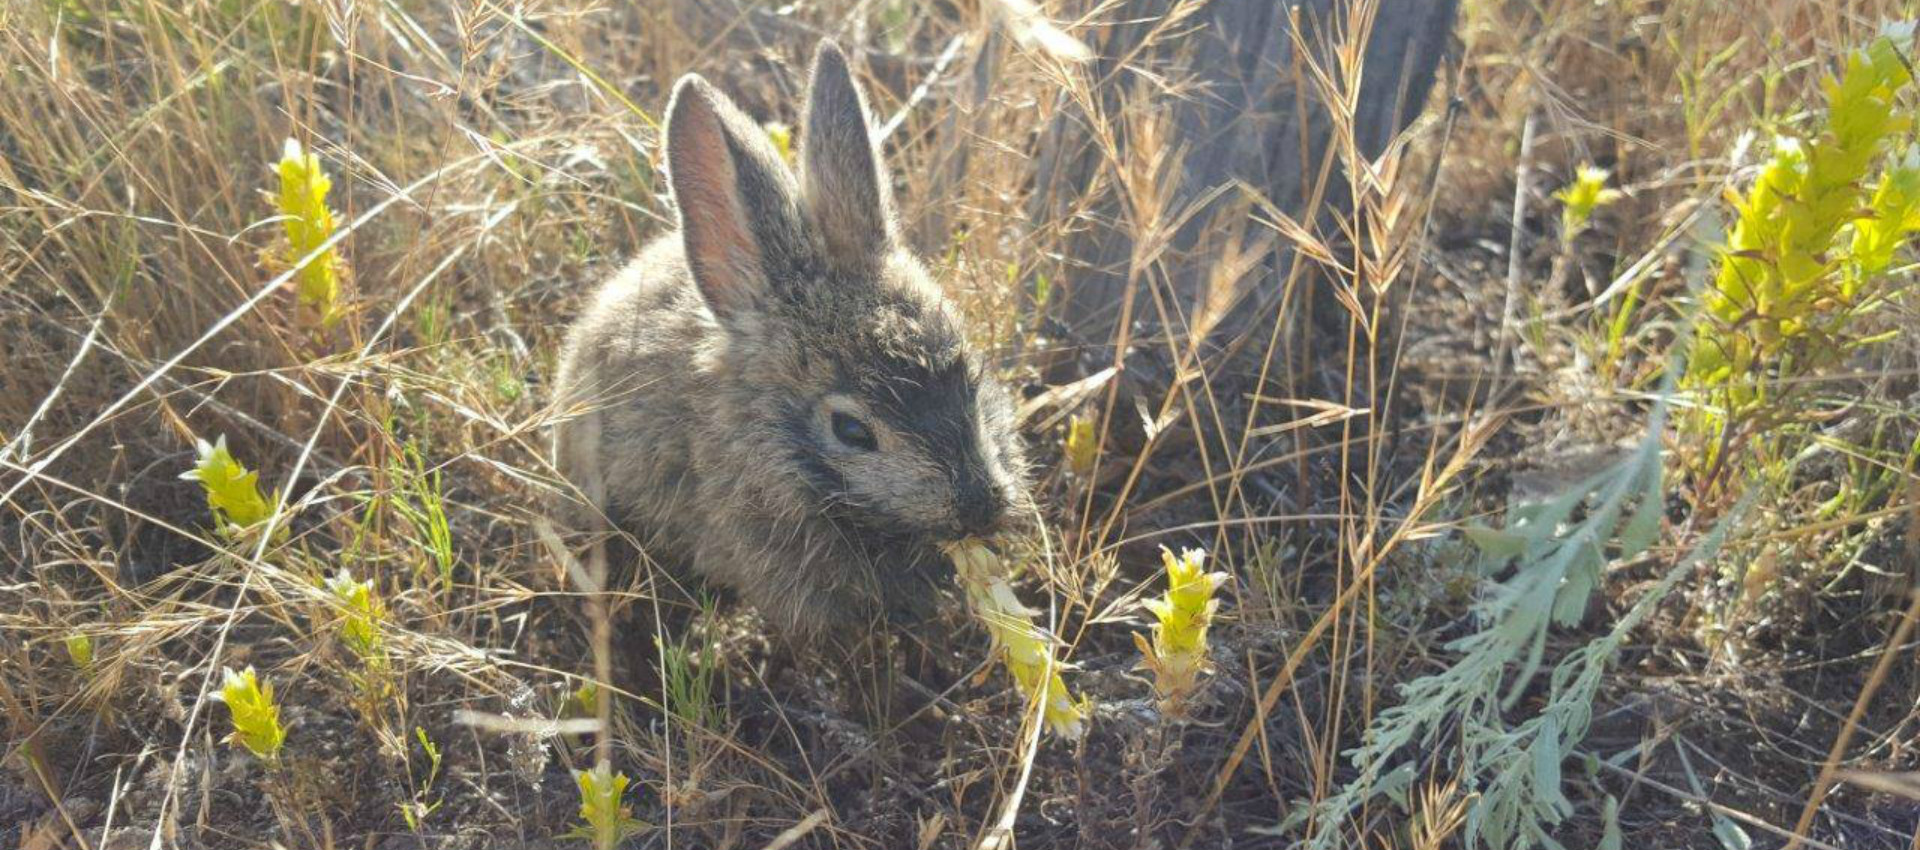 rescued-pygmy-rabbit-photo-kourtney-stonehouse-wdfw.jpg